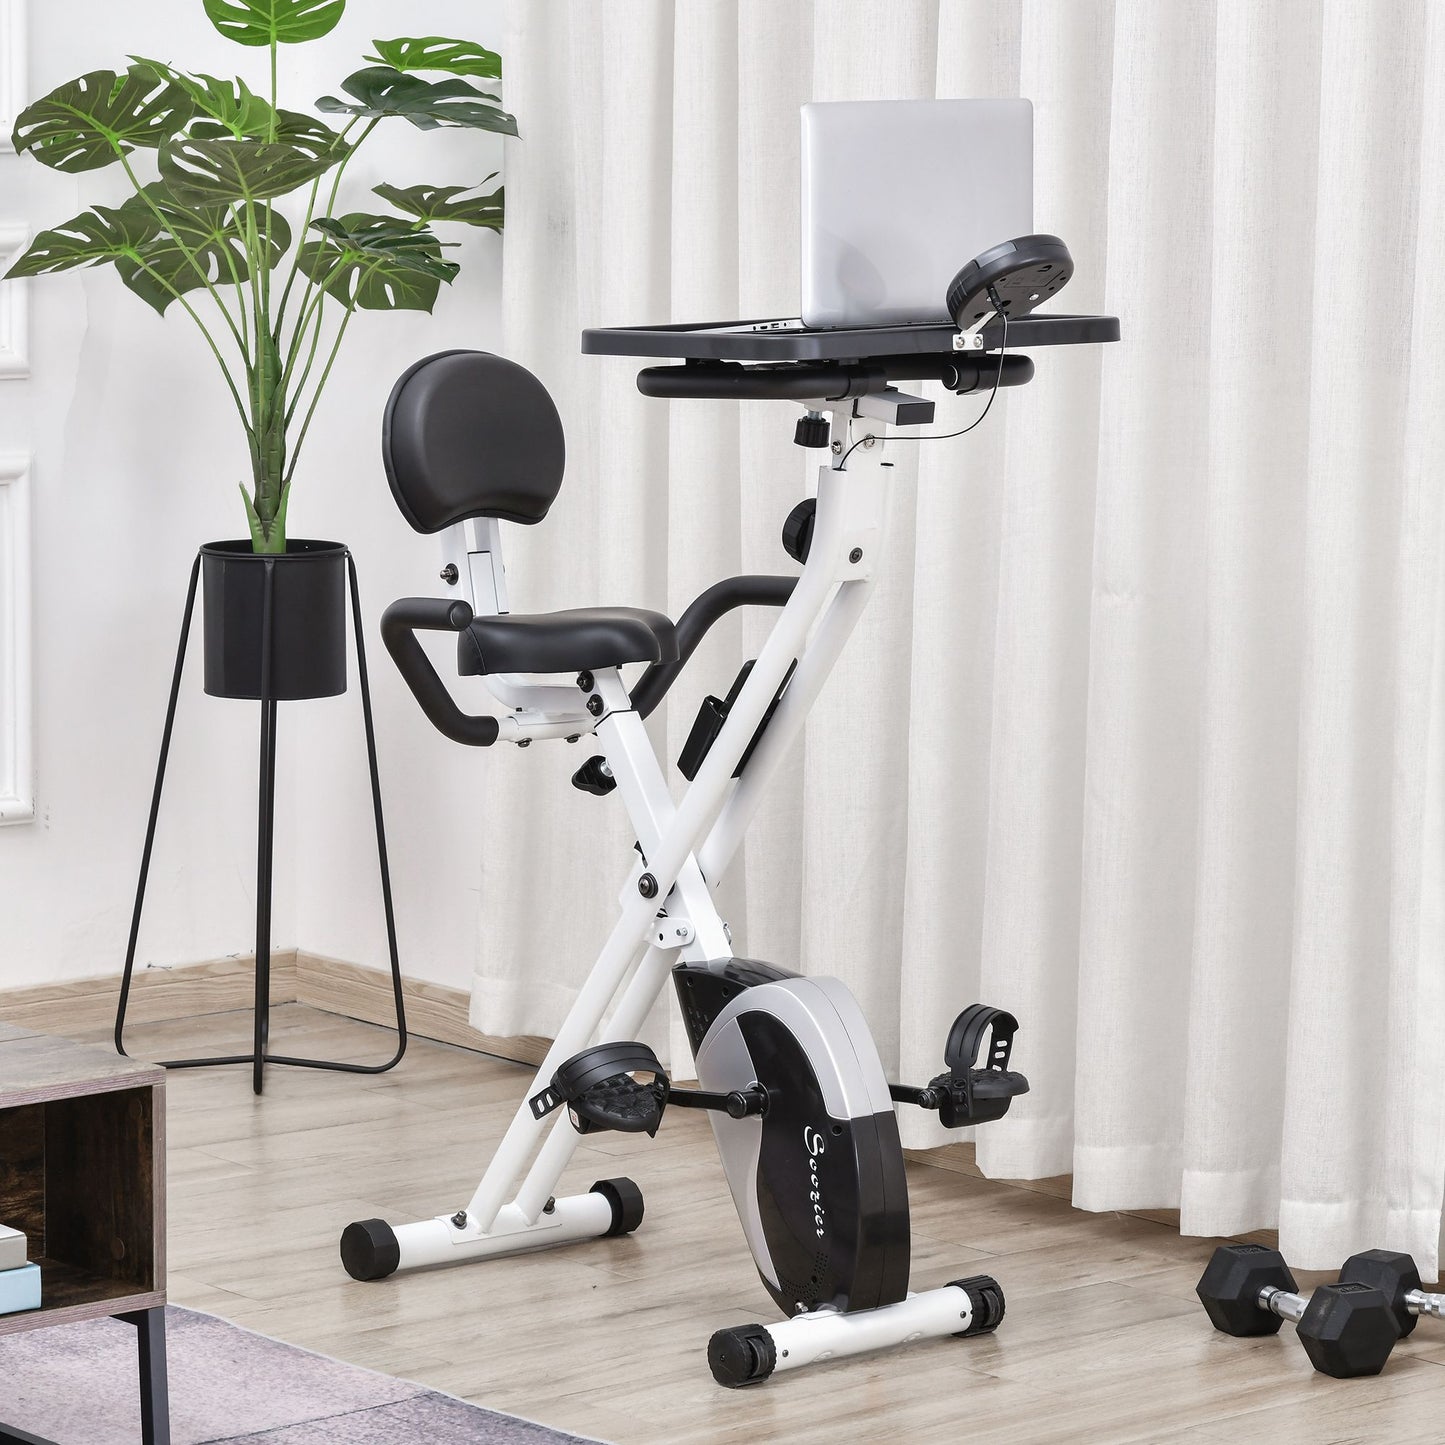 HOMCOM 8-Level Adjust Indoor Magnetic Exercise Bike Cardio Workout Bike Trainer